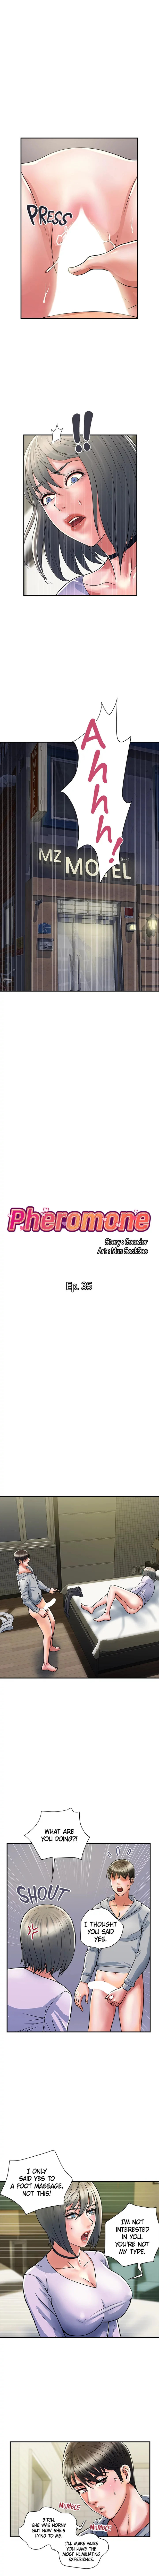 Pheromones Chapter 35 - Page 1